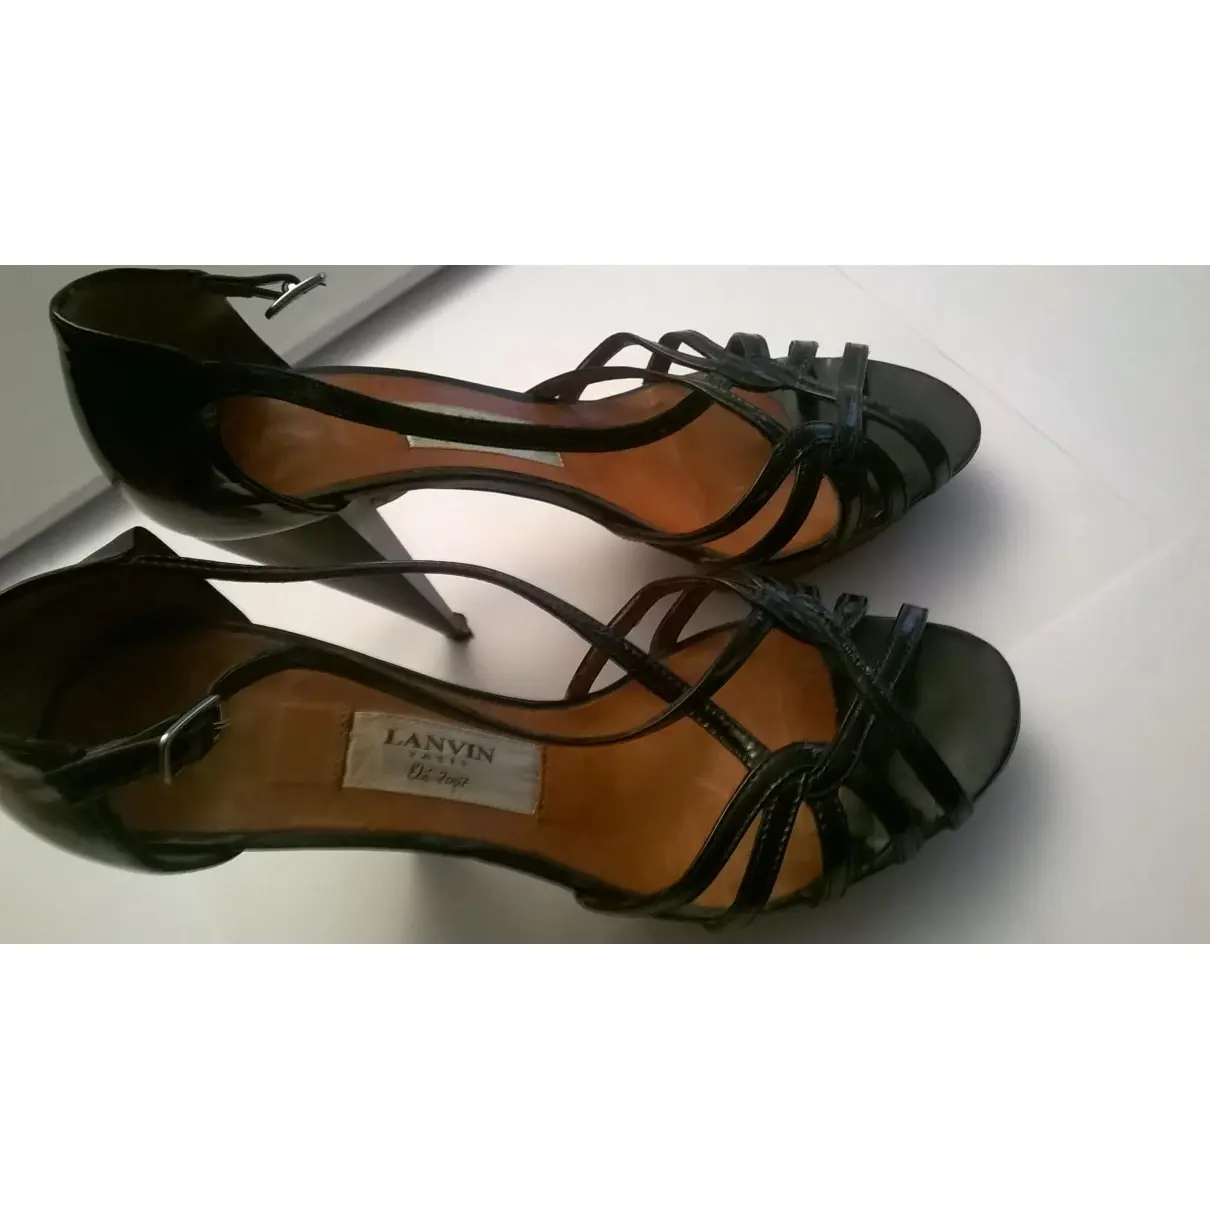 Buy Lanvin Patent leather heels online